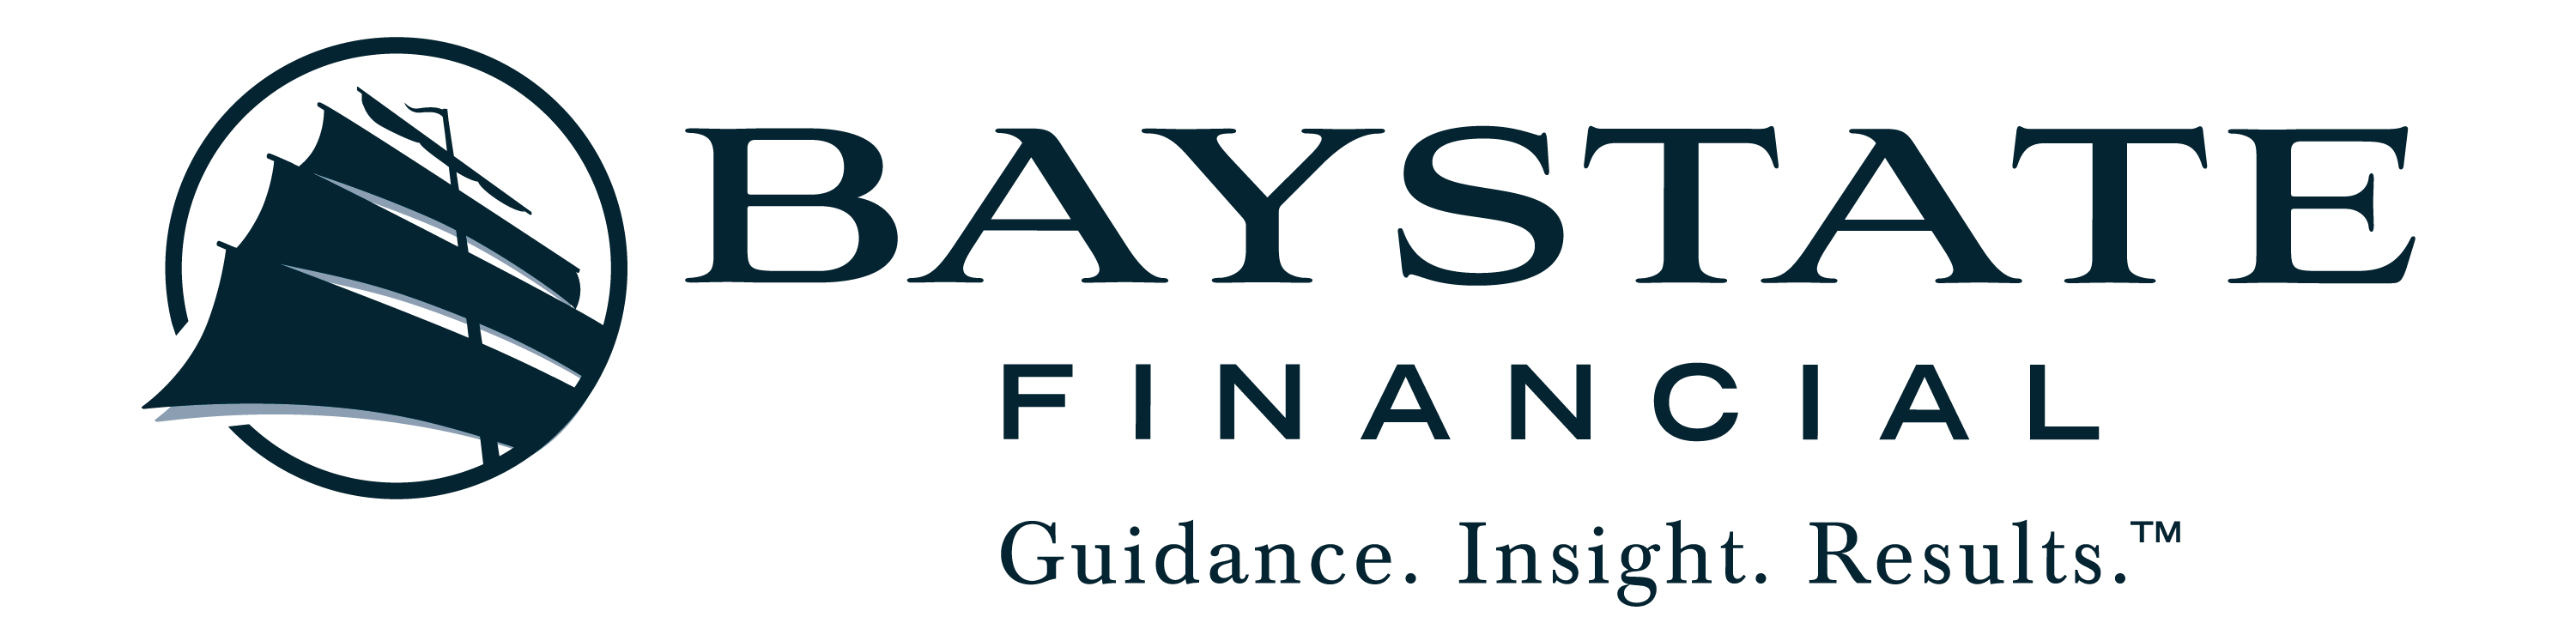 Baystate_Logo_Linear_4C_Tag Large-01